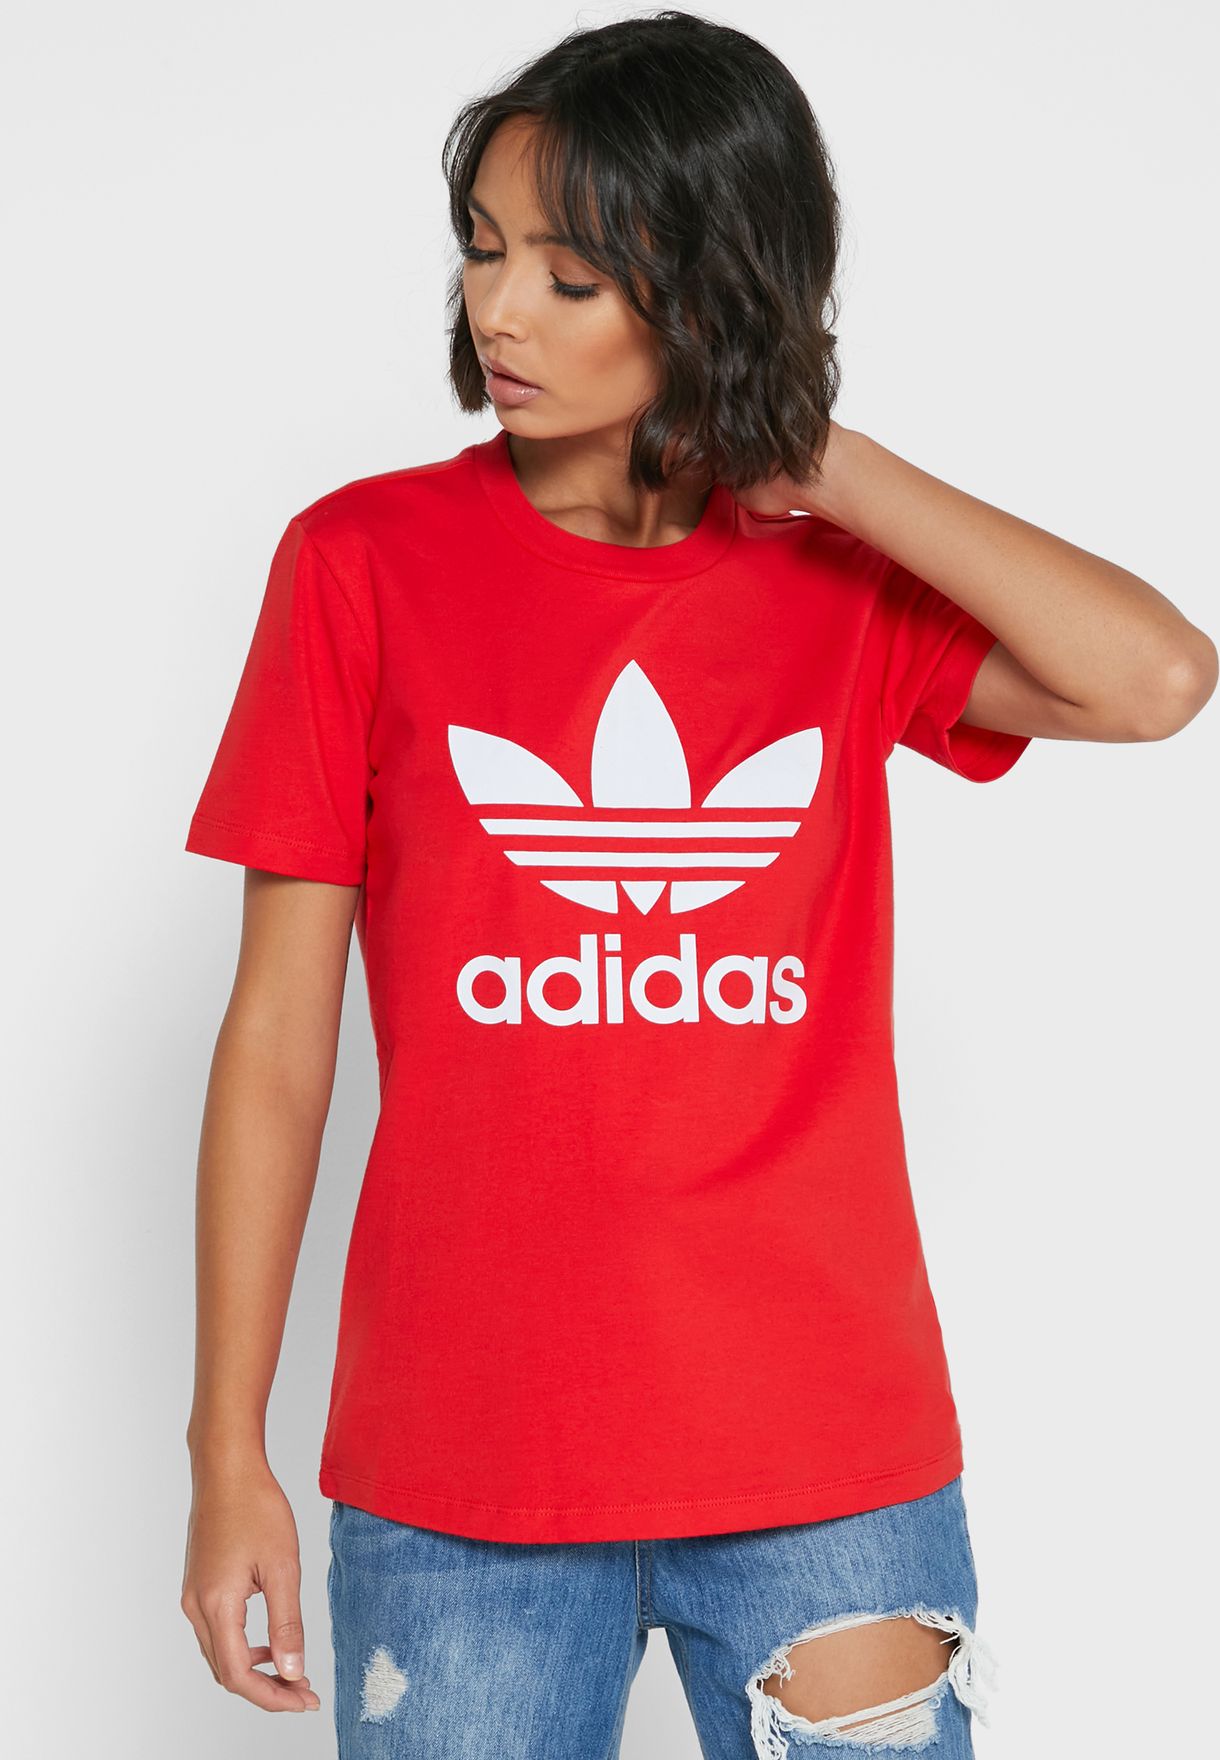 adidas red trefoil shirt